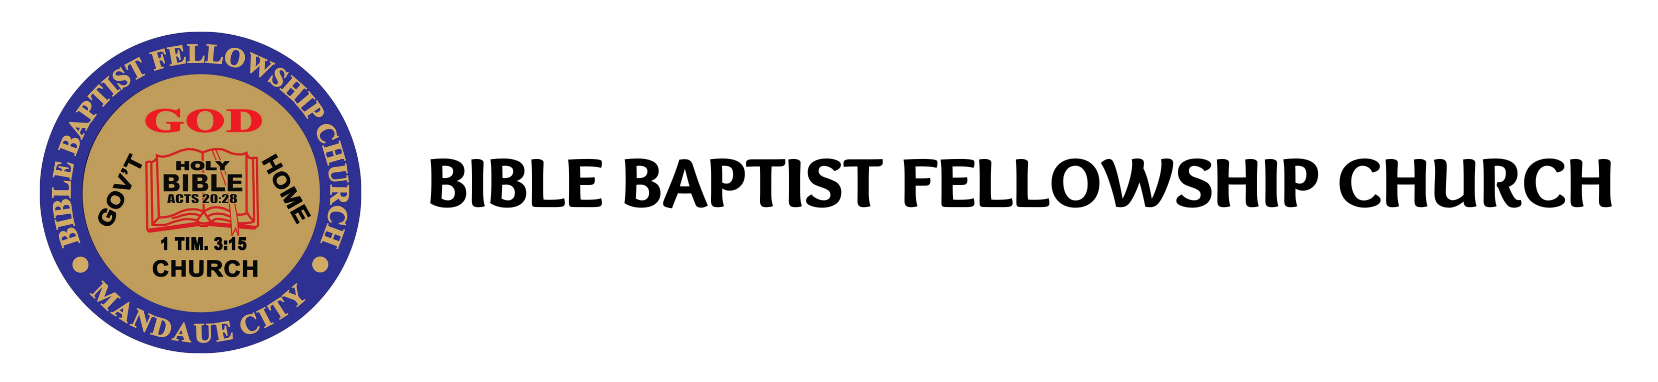 BIBLE BAPTIST FELLOWSHIP CHURCH